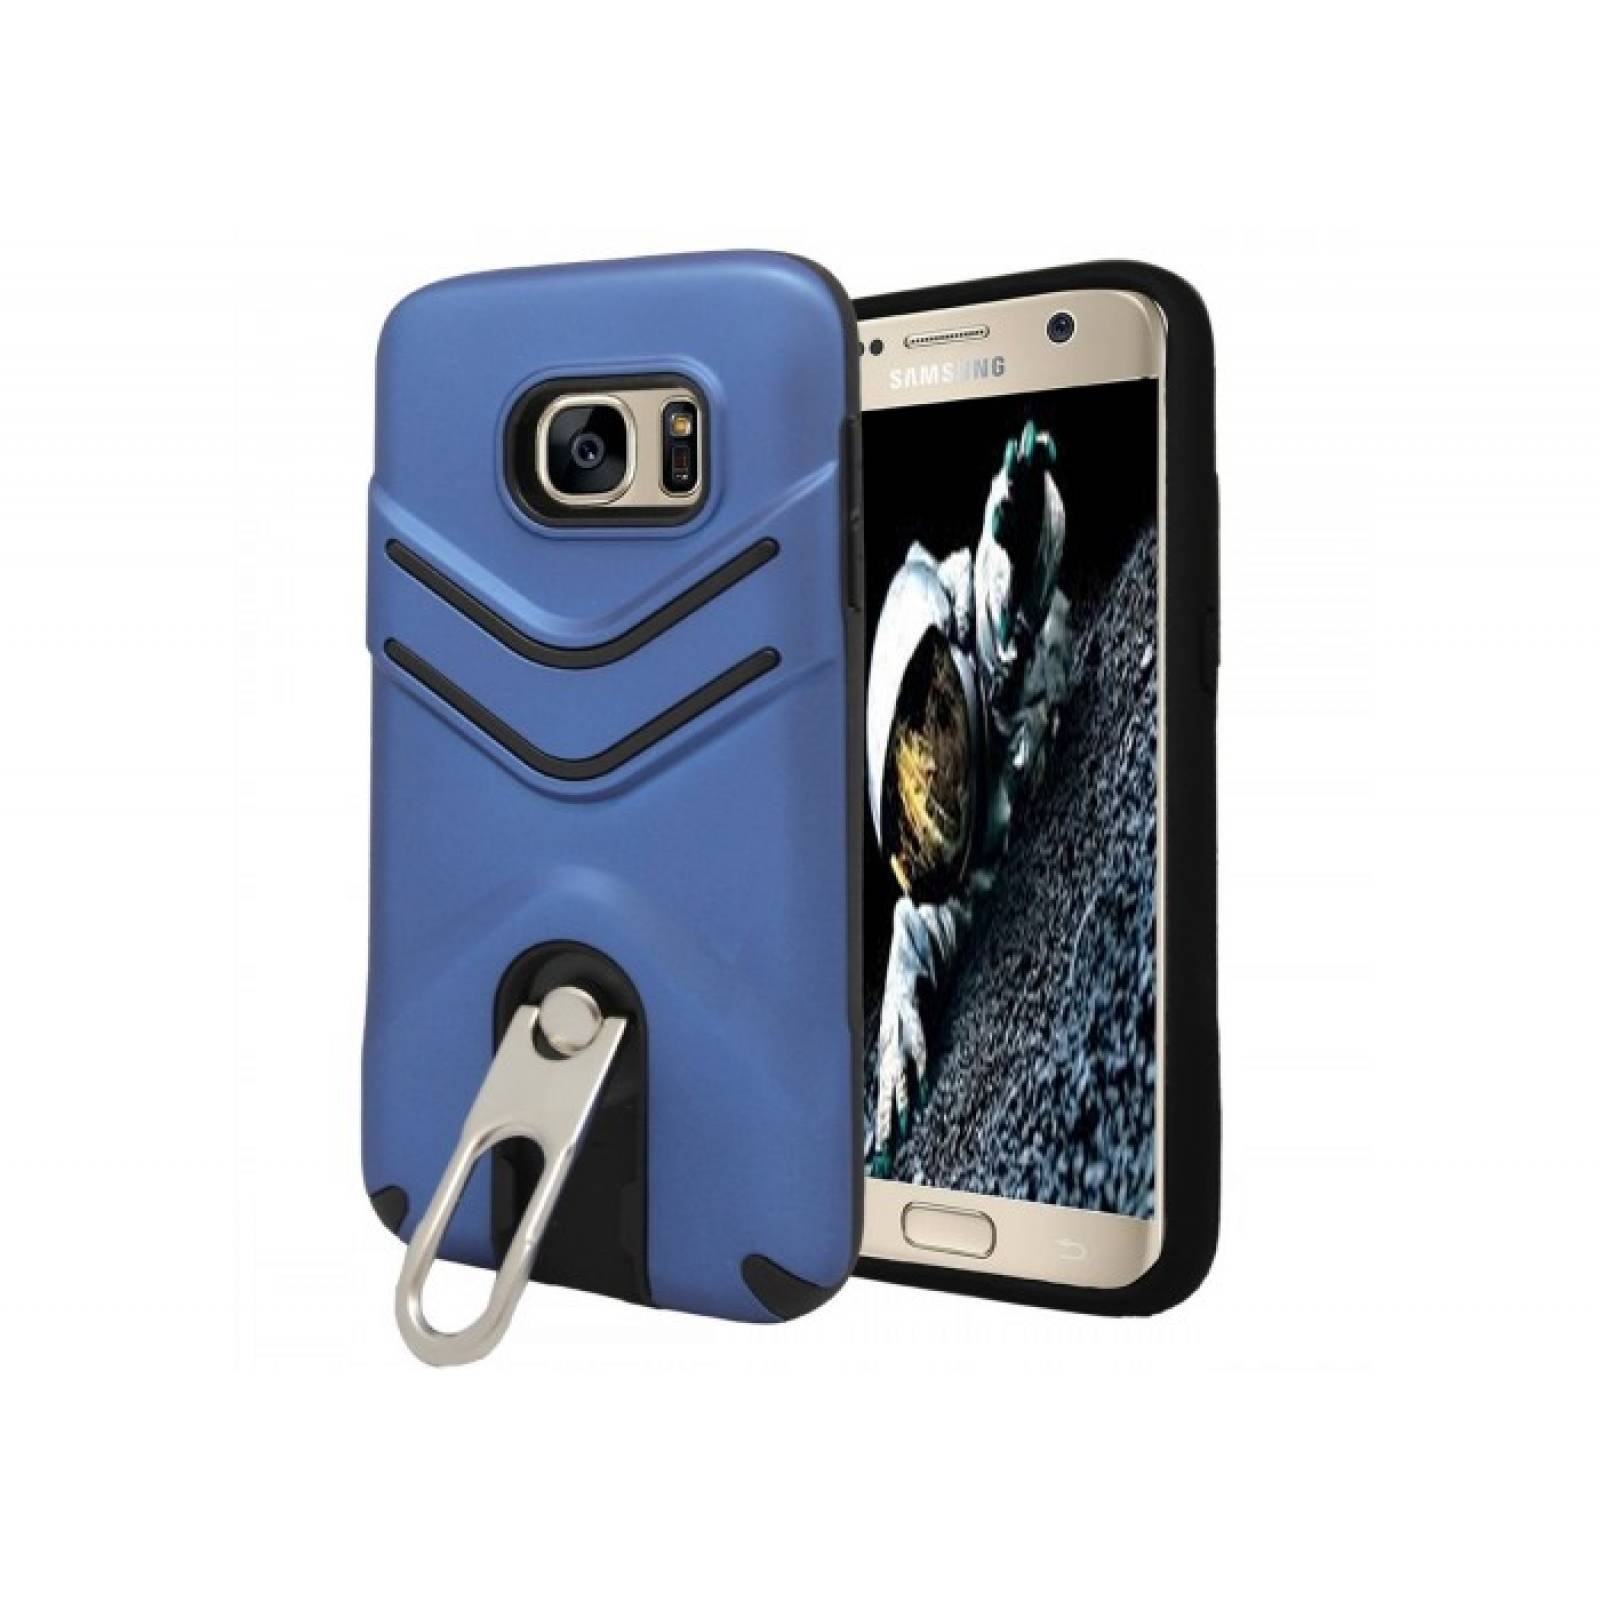 Funda Case Galaxy S7 Edge SM-G935F Protector Uso Rudo Iron Bear